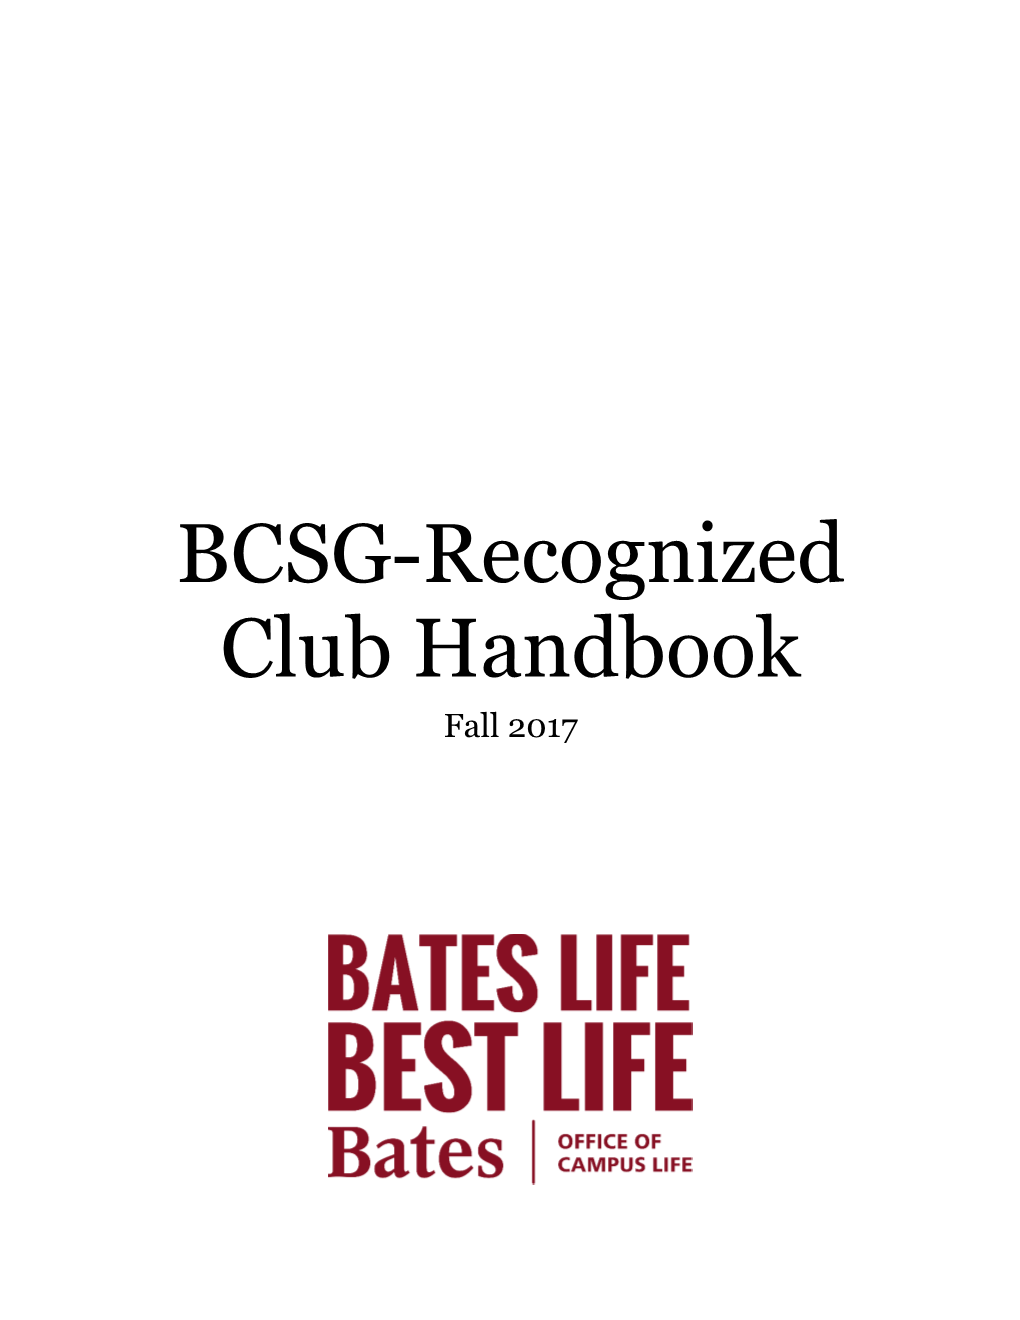 BCSG-Recognized Club Handbook Fall 2017